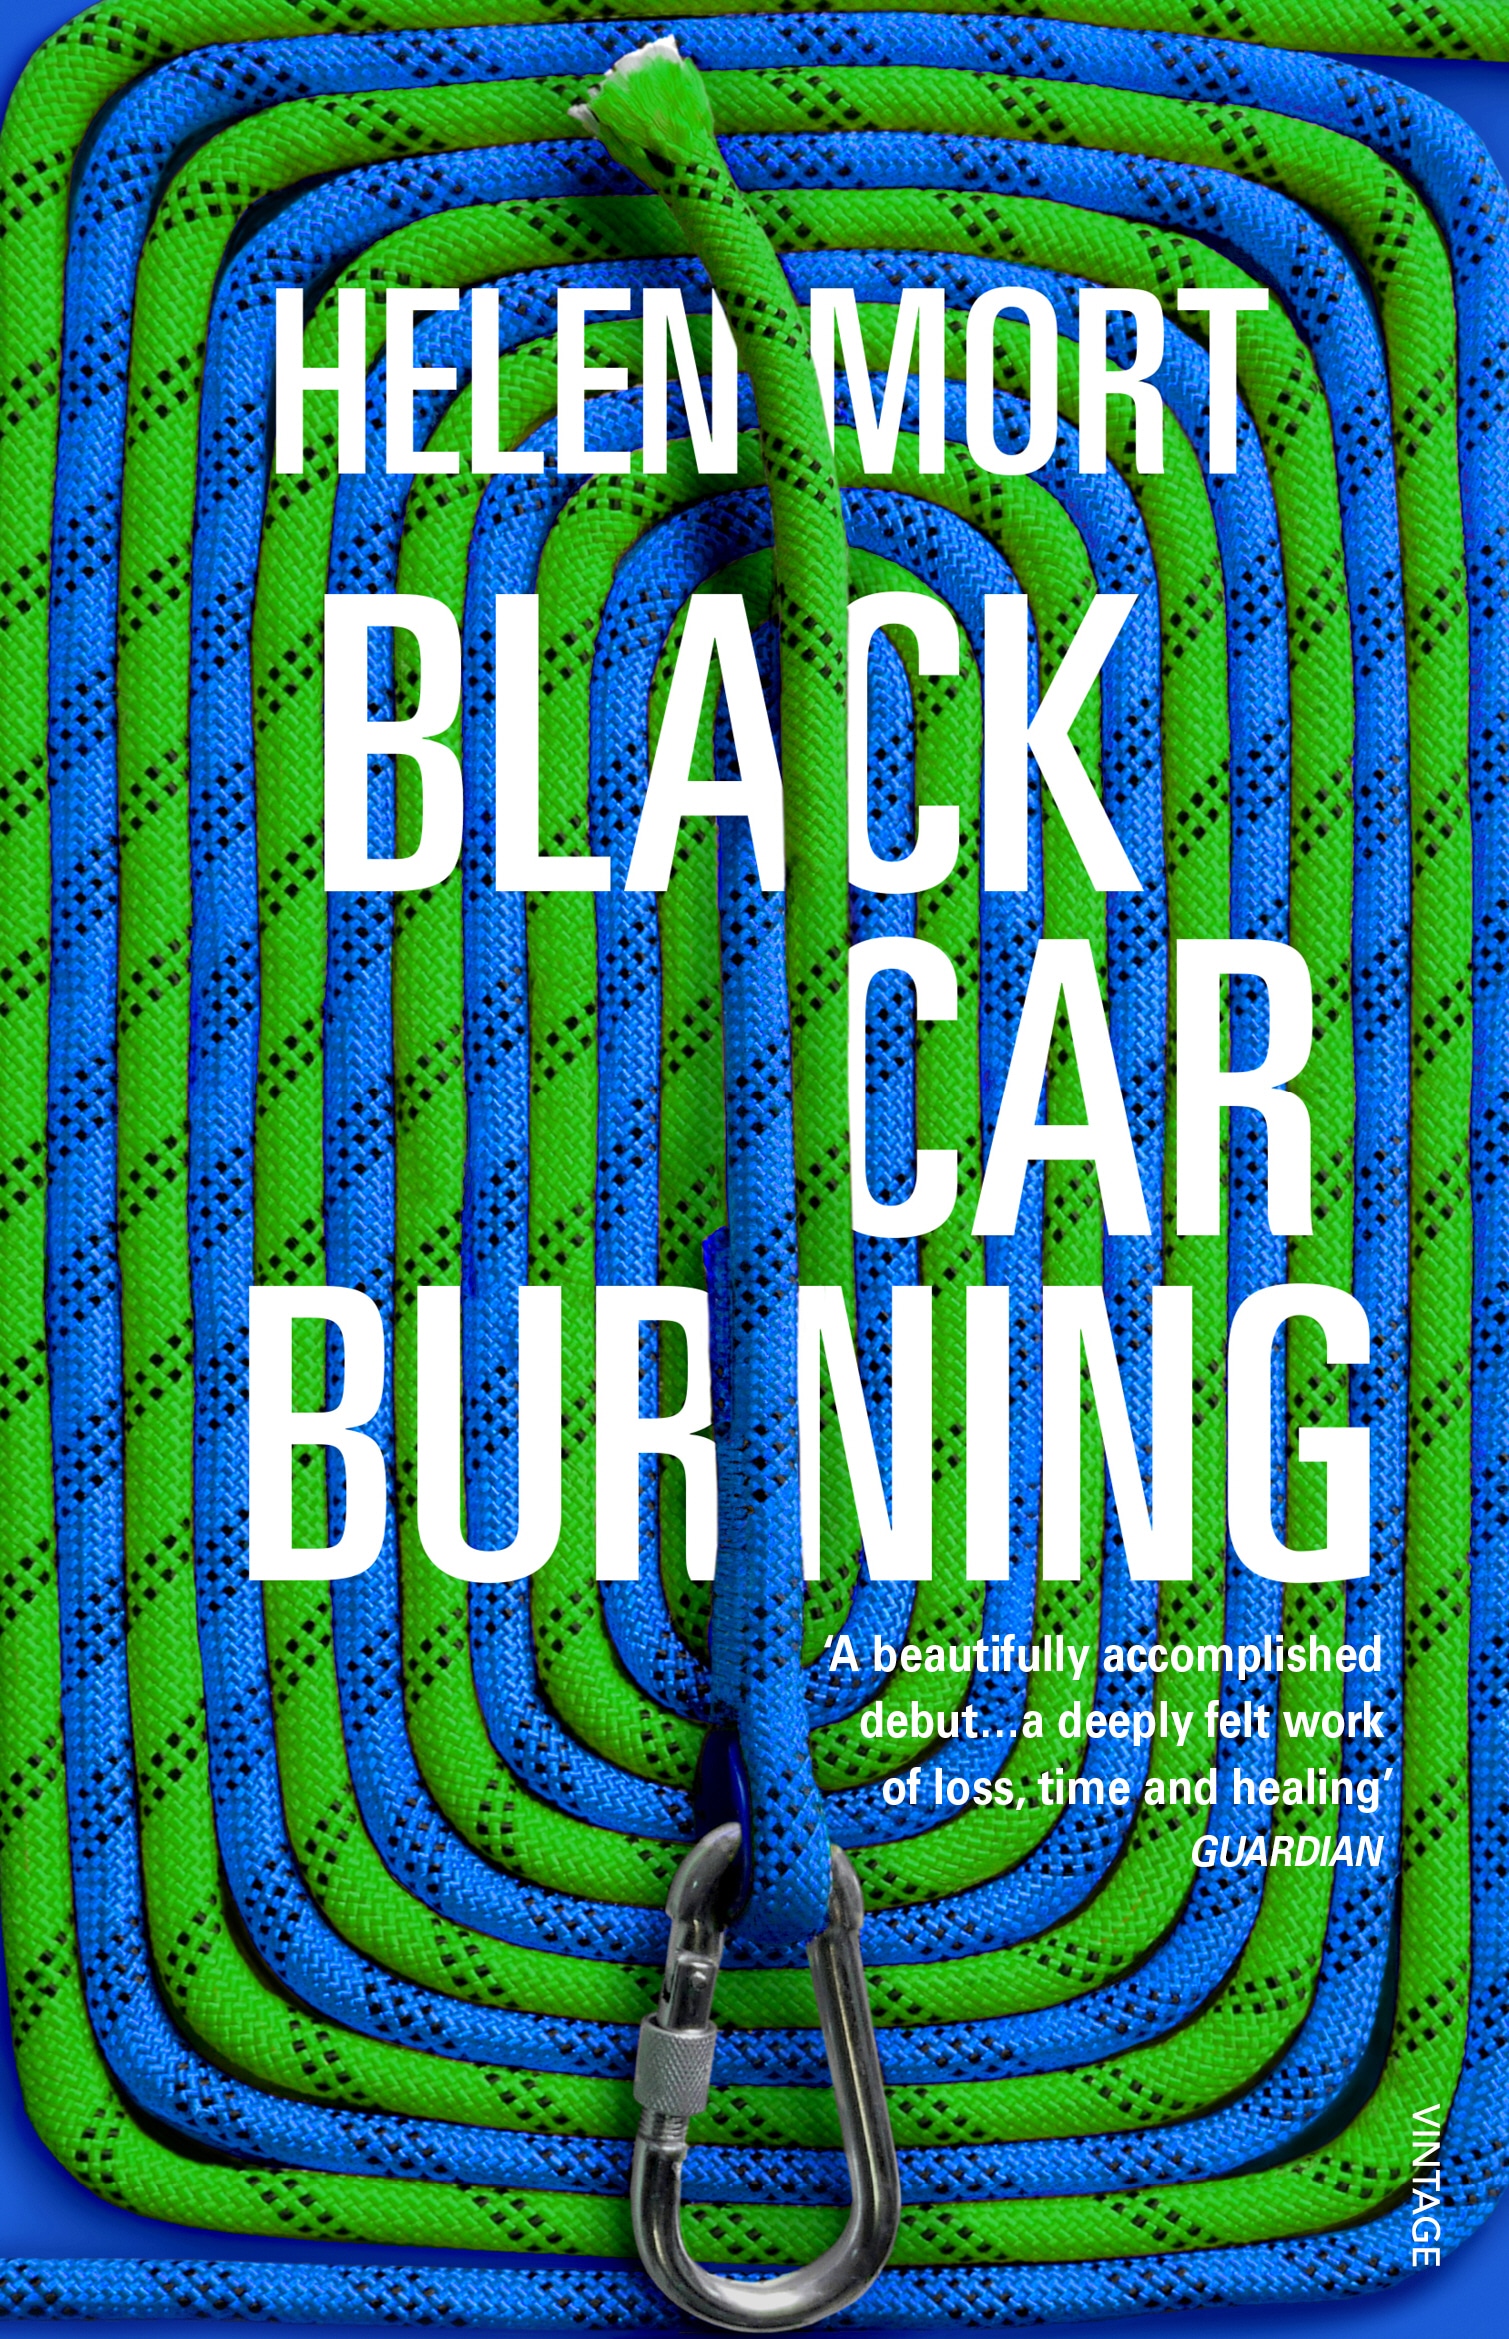 Book “Black Car Burning” by Helen Mort — July 16, 2020